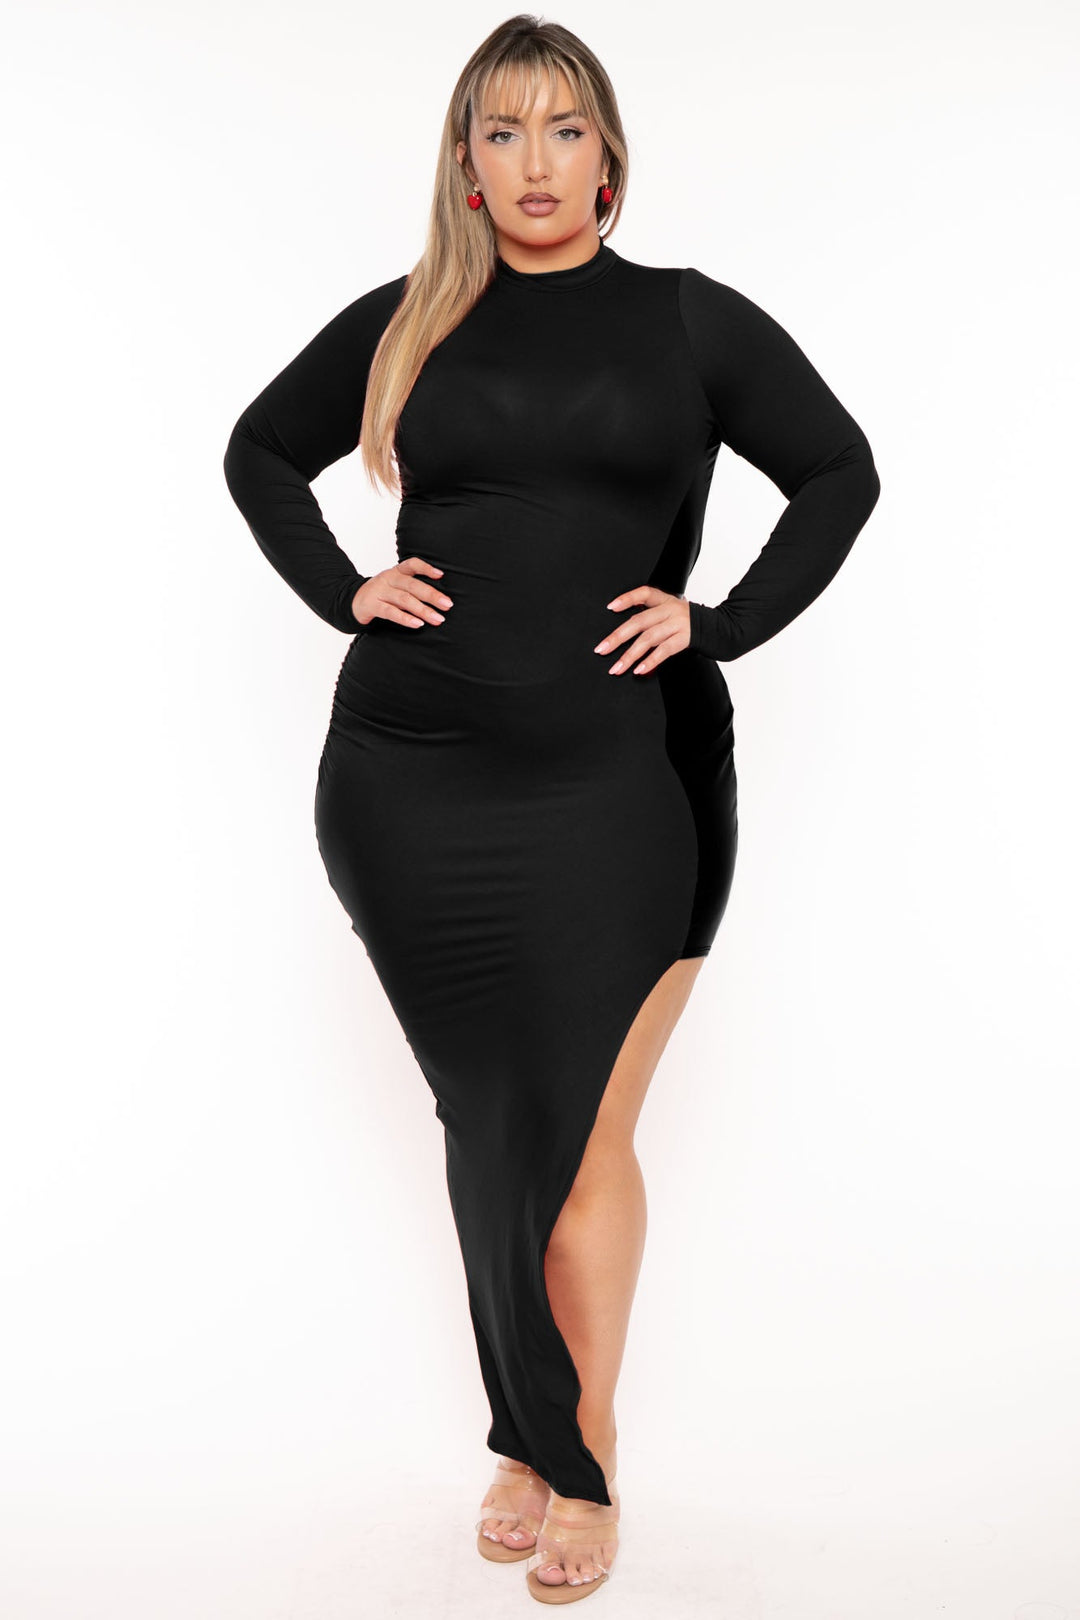 Curvy Sense Dresses 1X / Black Plus Size Melanie Asymmetric Maxi Dress - Black